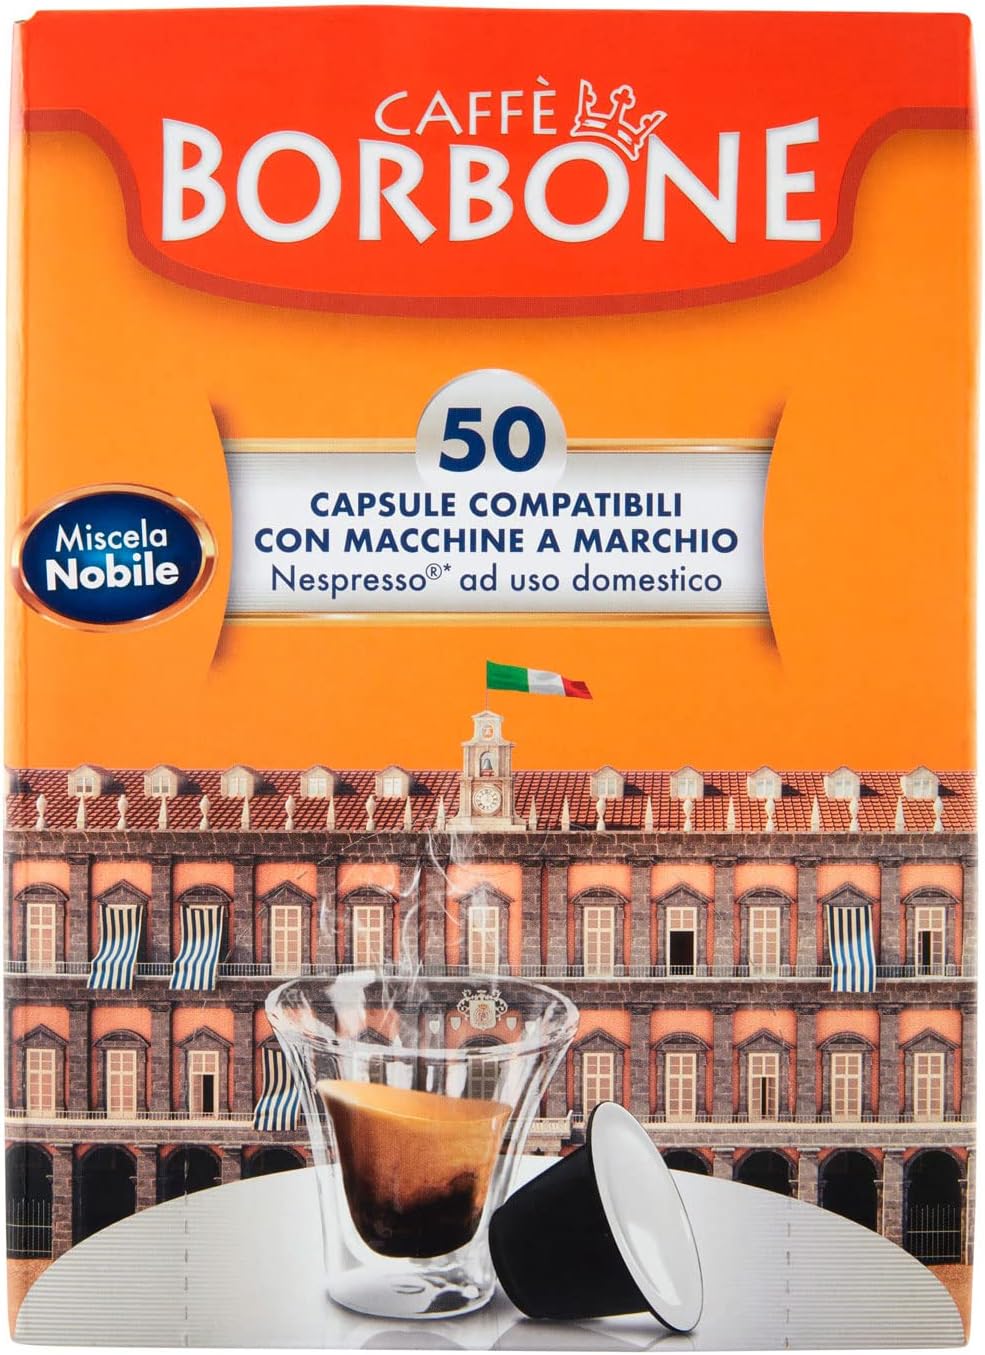 Caffe Borbone REBBLUPALAZNOBIL050N Capsule Caffe Comp.nespresso Miscela Nobile 50pz